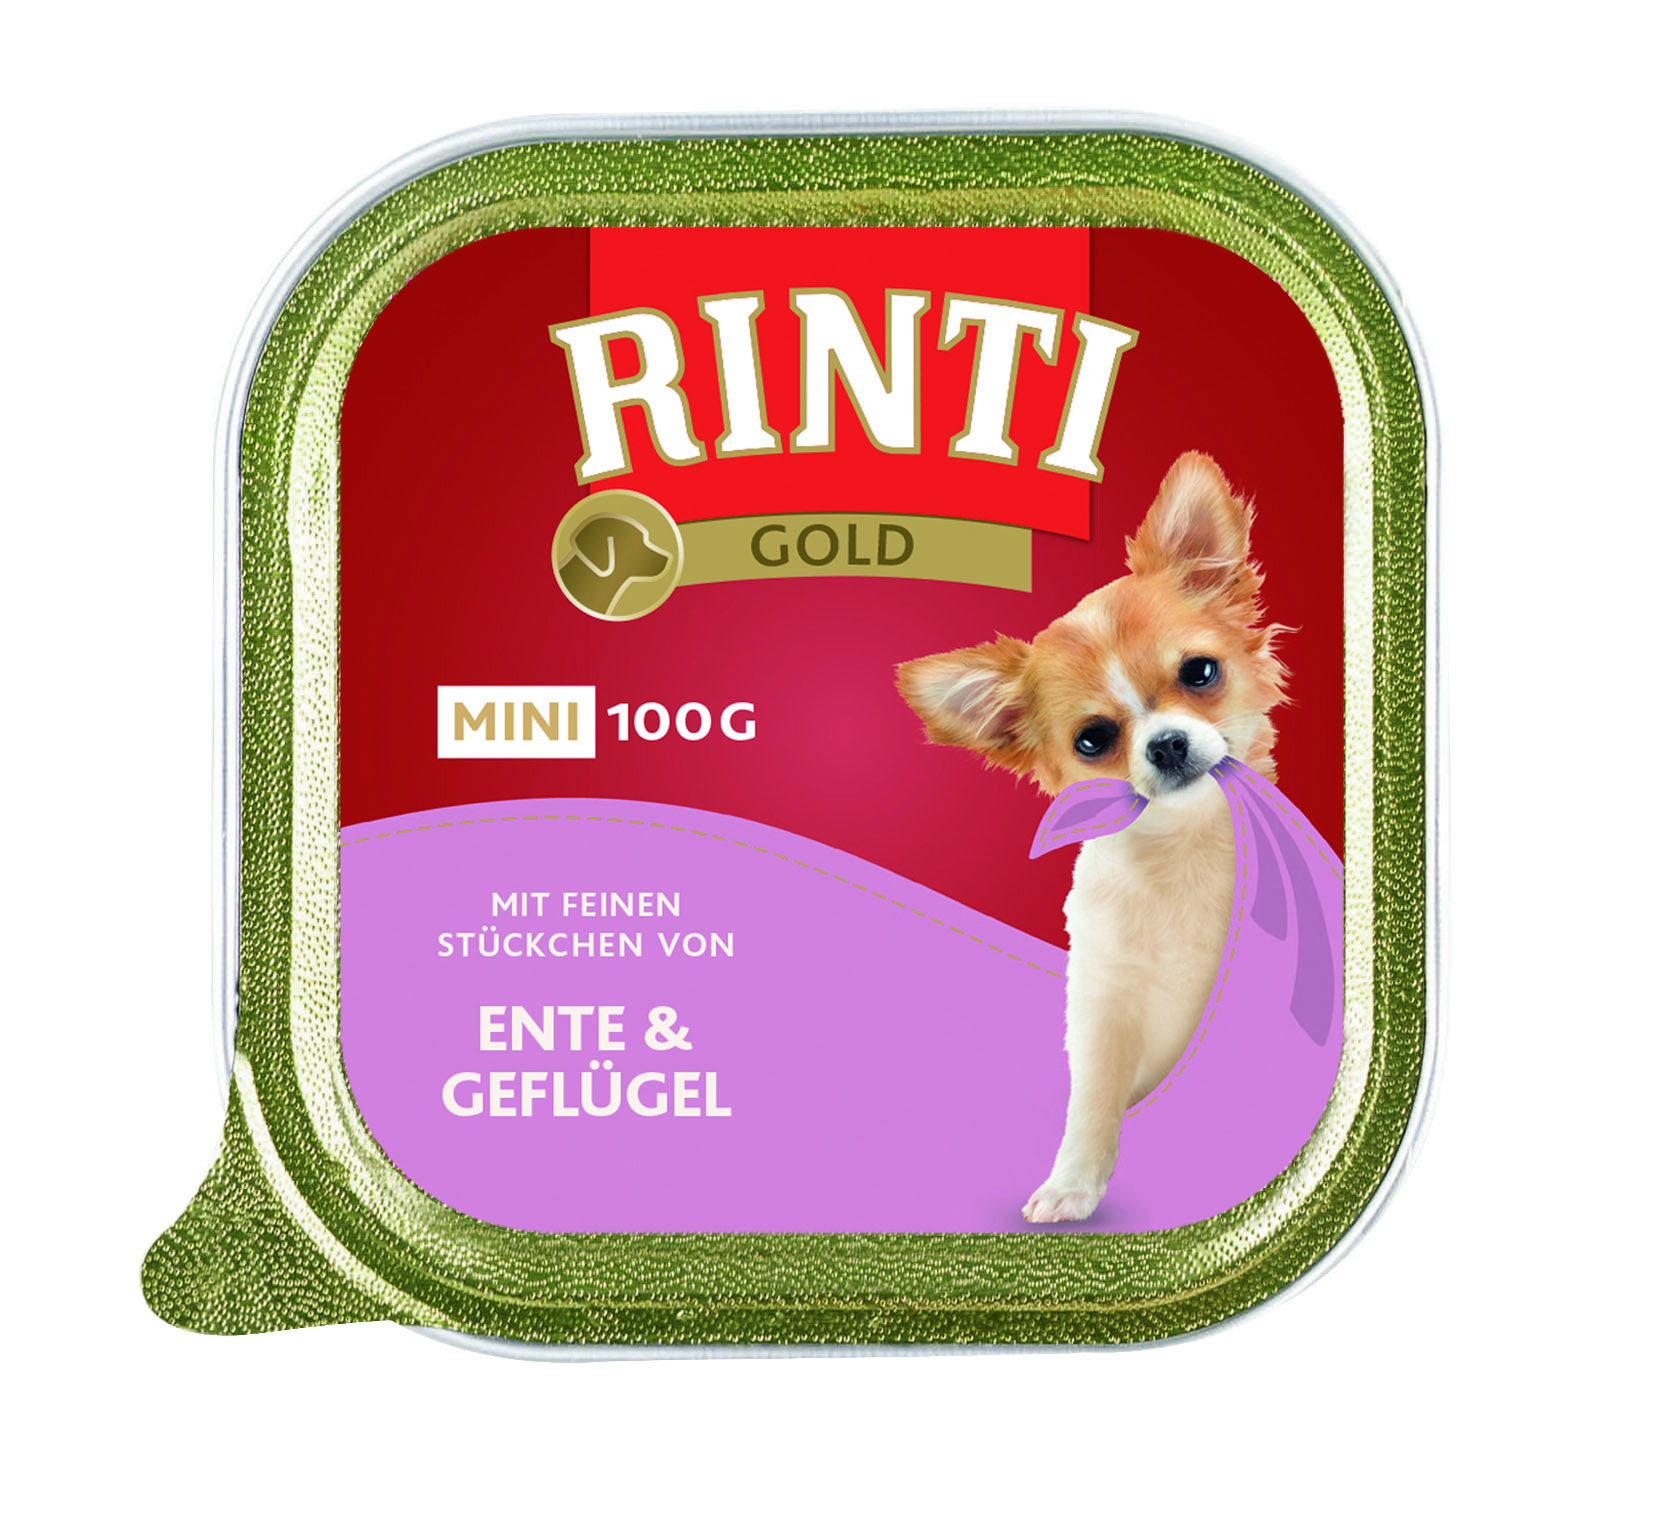 Rinti Gold mini Ente & Geflügel 100g